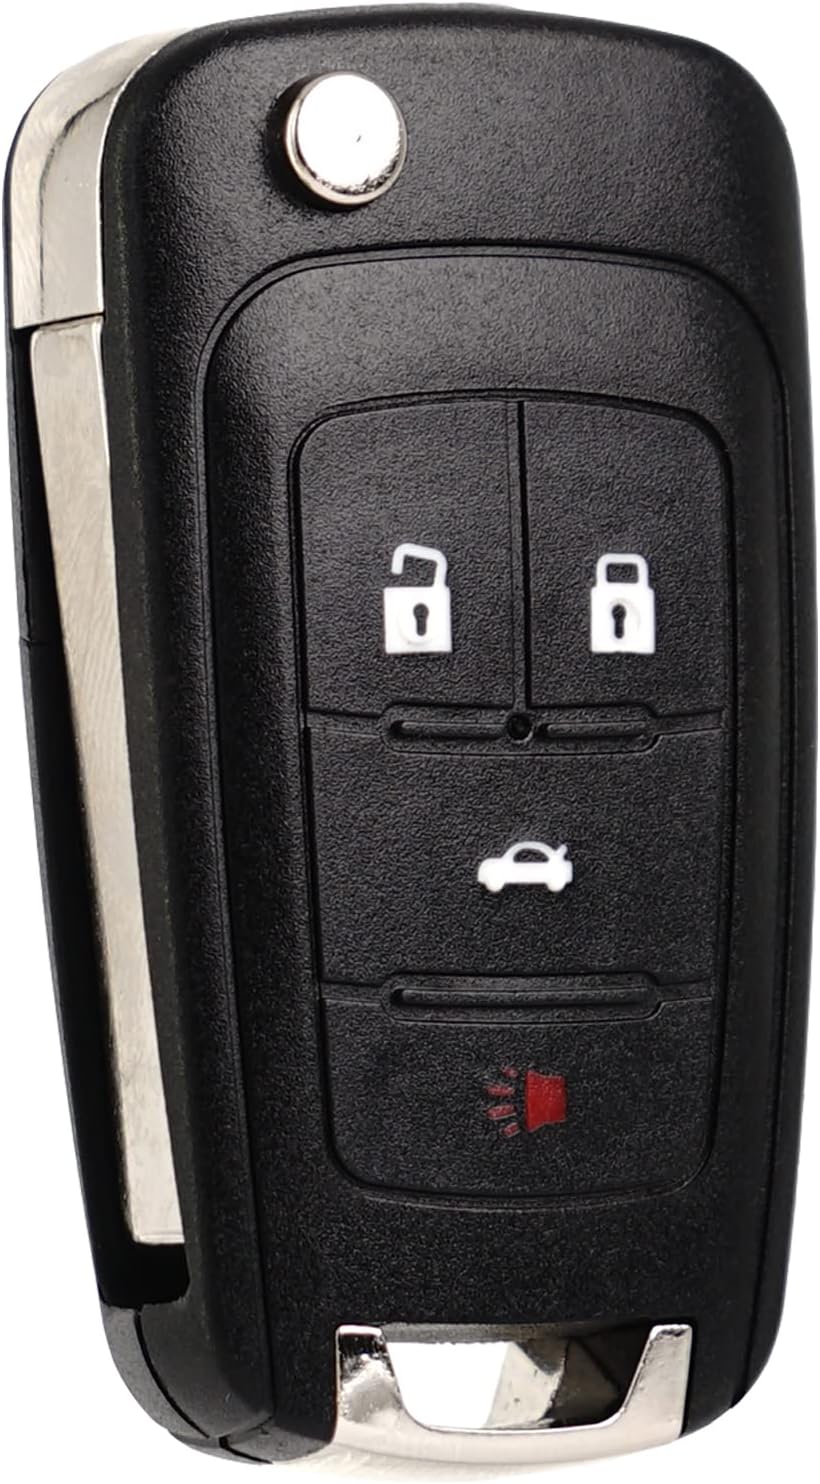 Generic Keyless Entry Remote Control Key Fob Replacement Fits for Chevy Cruze Equinox Camaro Impala Malibu Sonic Buick Regal Verano Enc